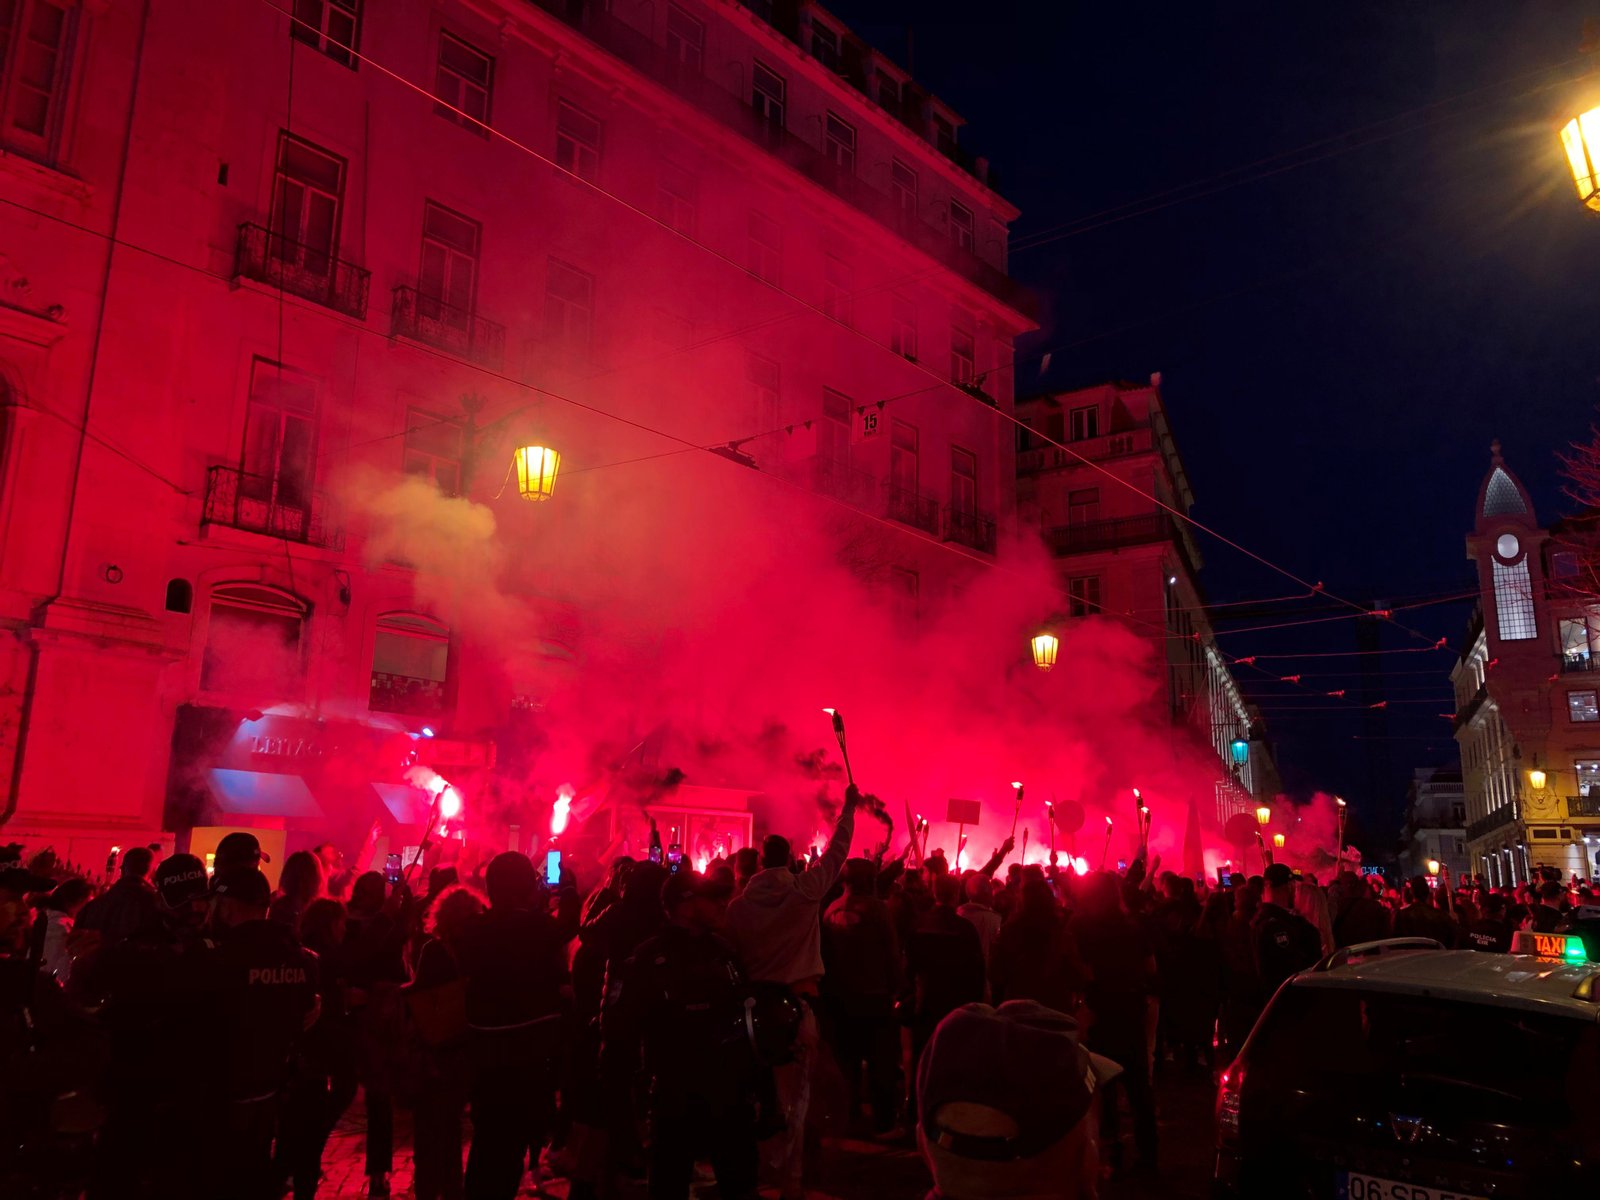 Extremistas de direita fazem marcha xenofóbica em Lisboa. Crédito: Stefani Costa, BRASIL JÁ